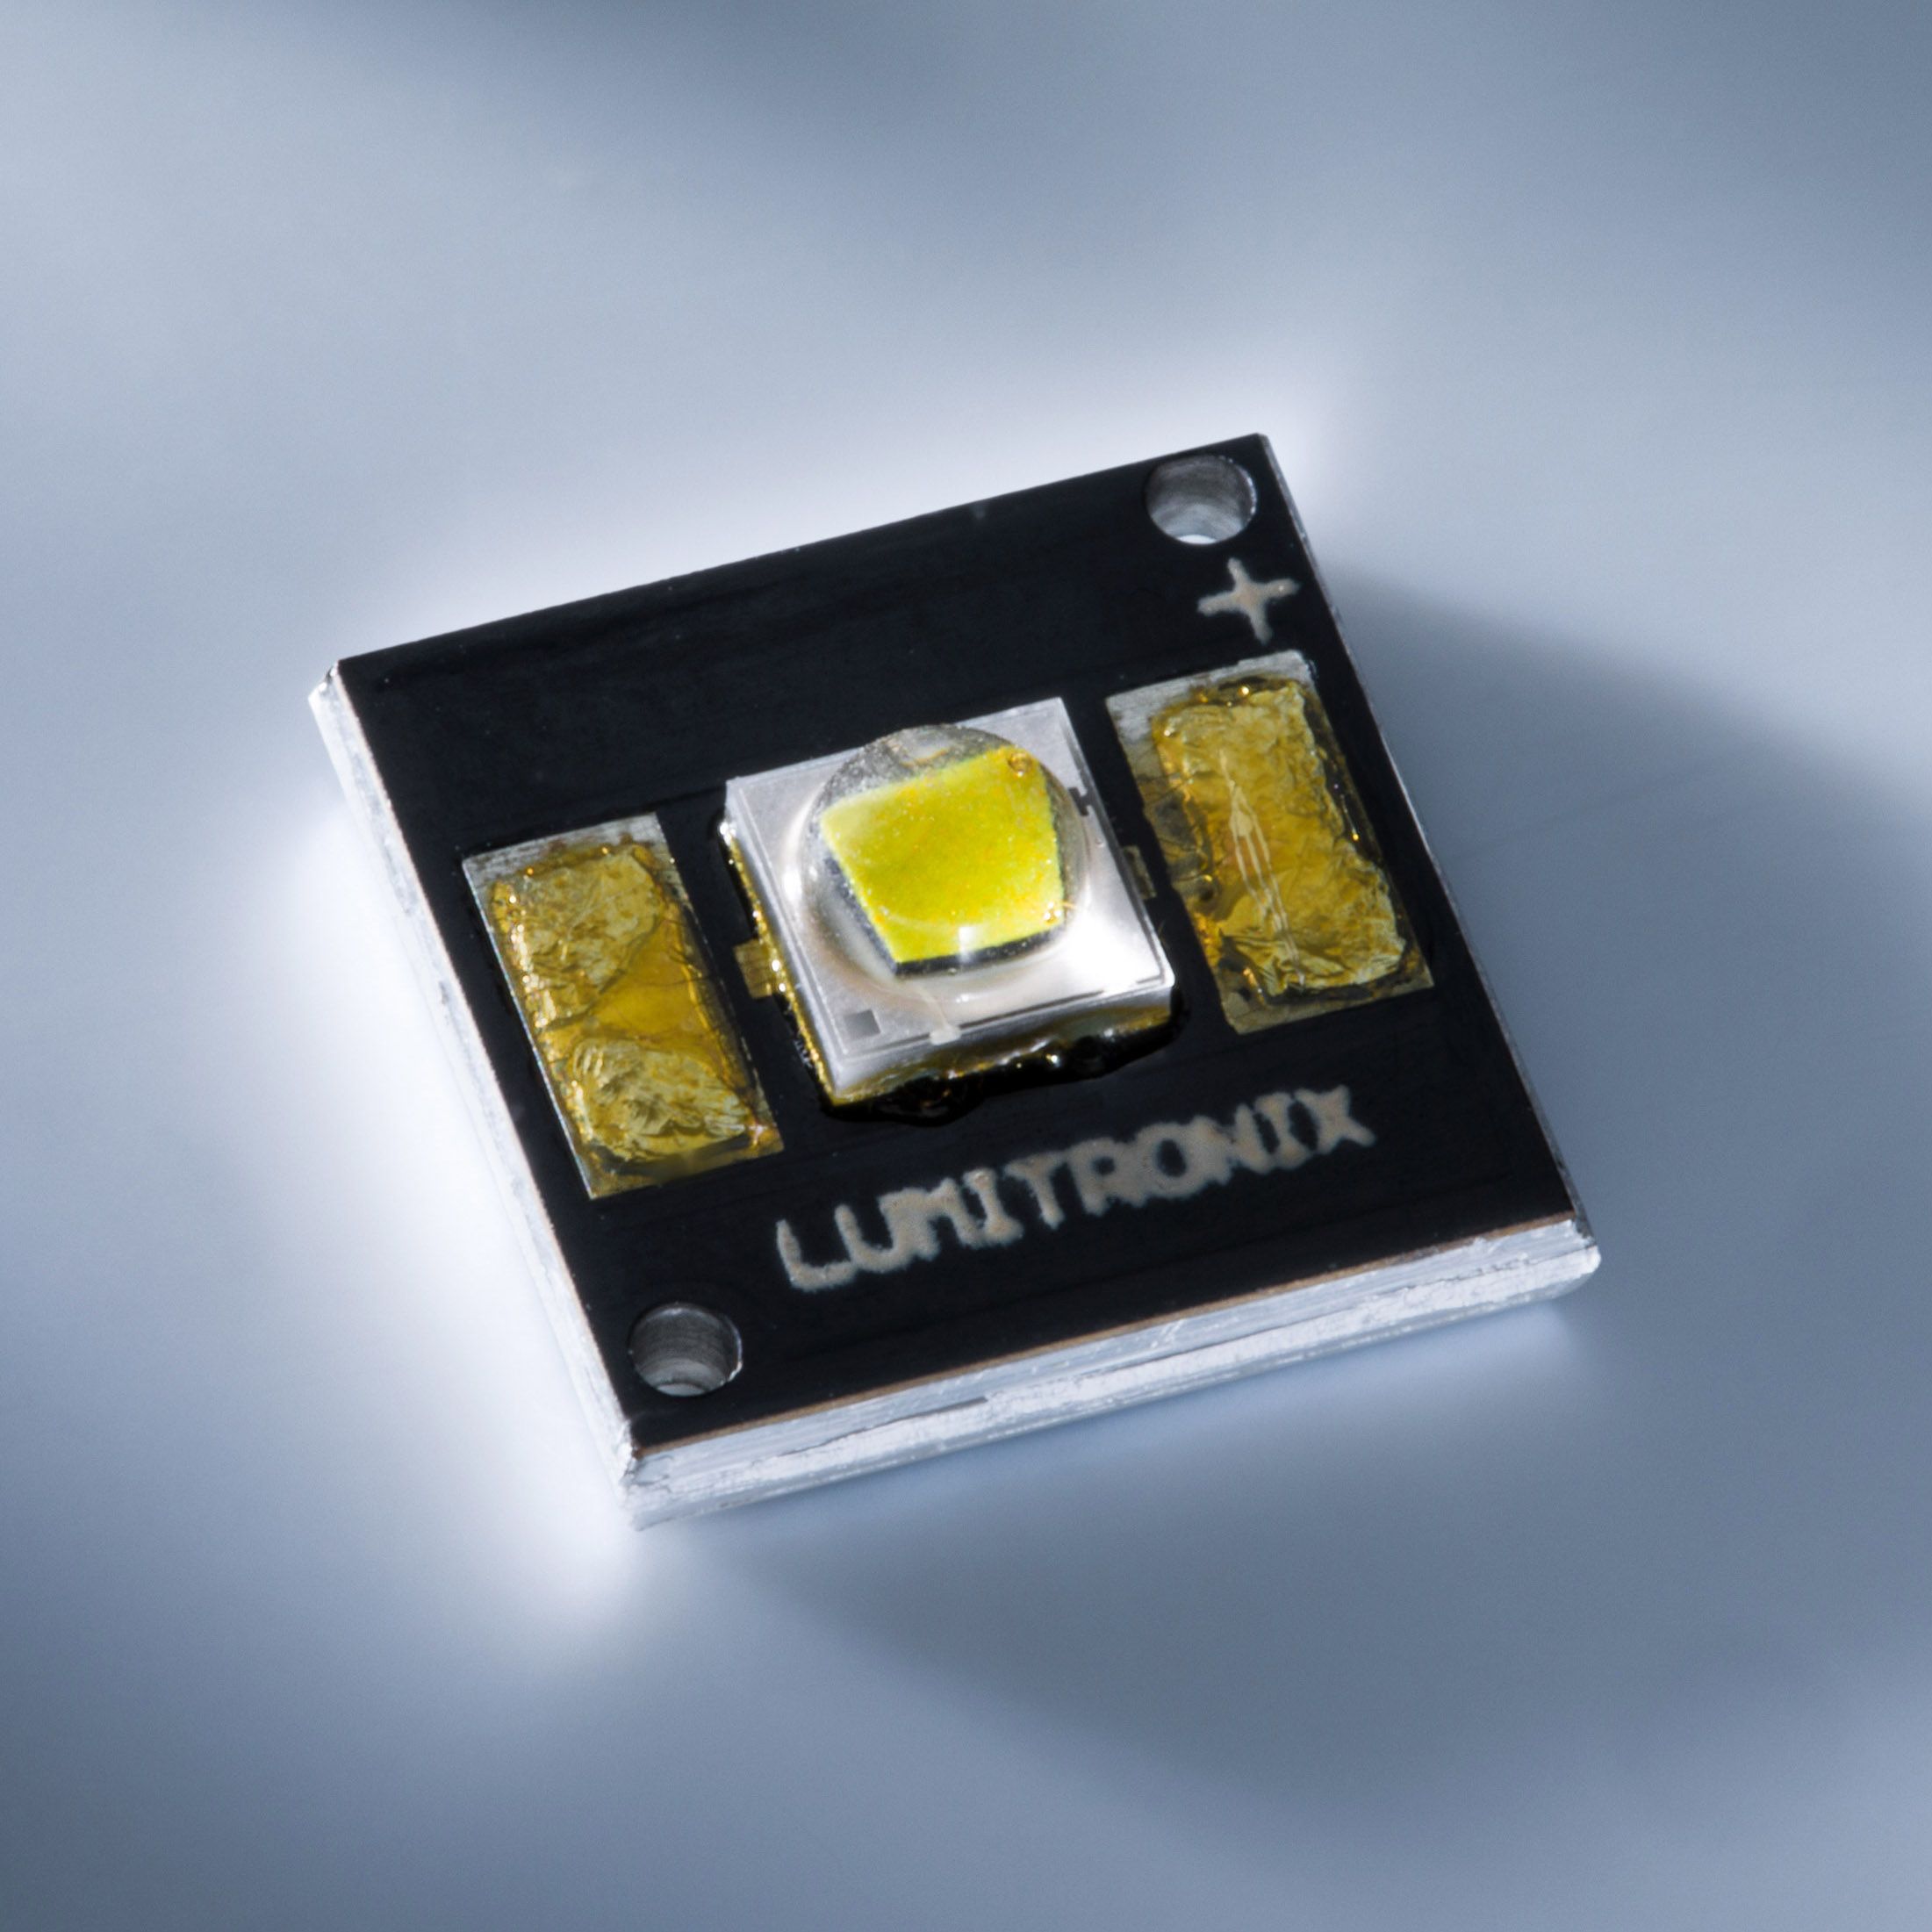 Ledrise - High Performance Led Lighting Cree XP-G2 R2 warmwhite LED, 3W XPGBWT-U1-0000-00AE7 1x1cm SQUARE PCB|68438